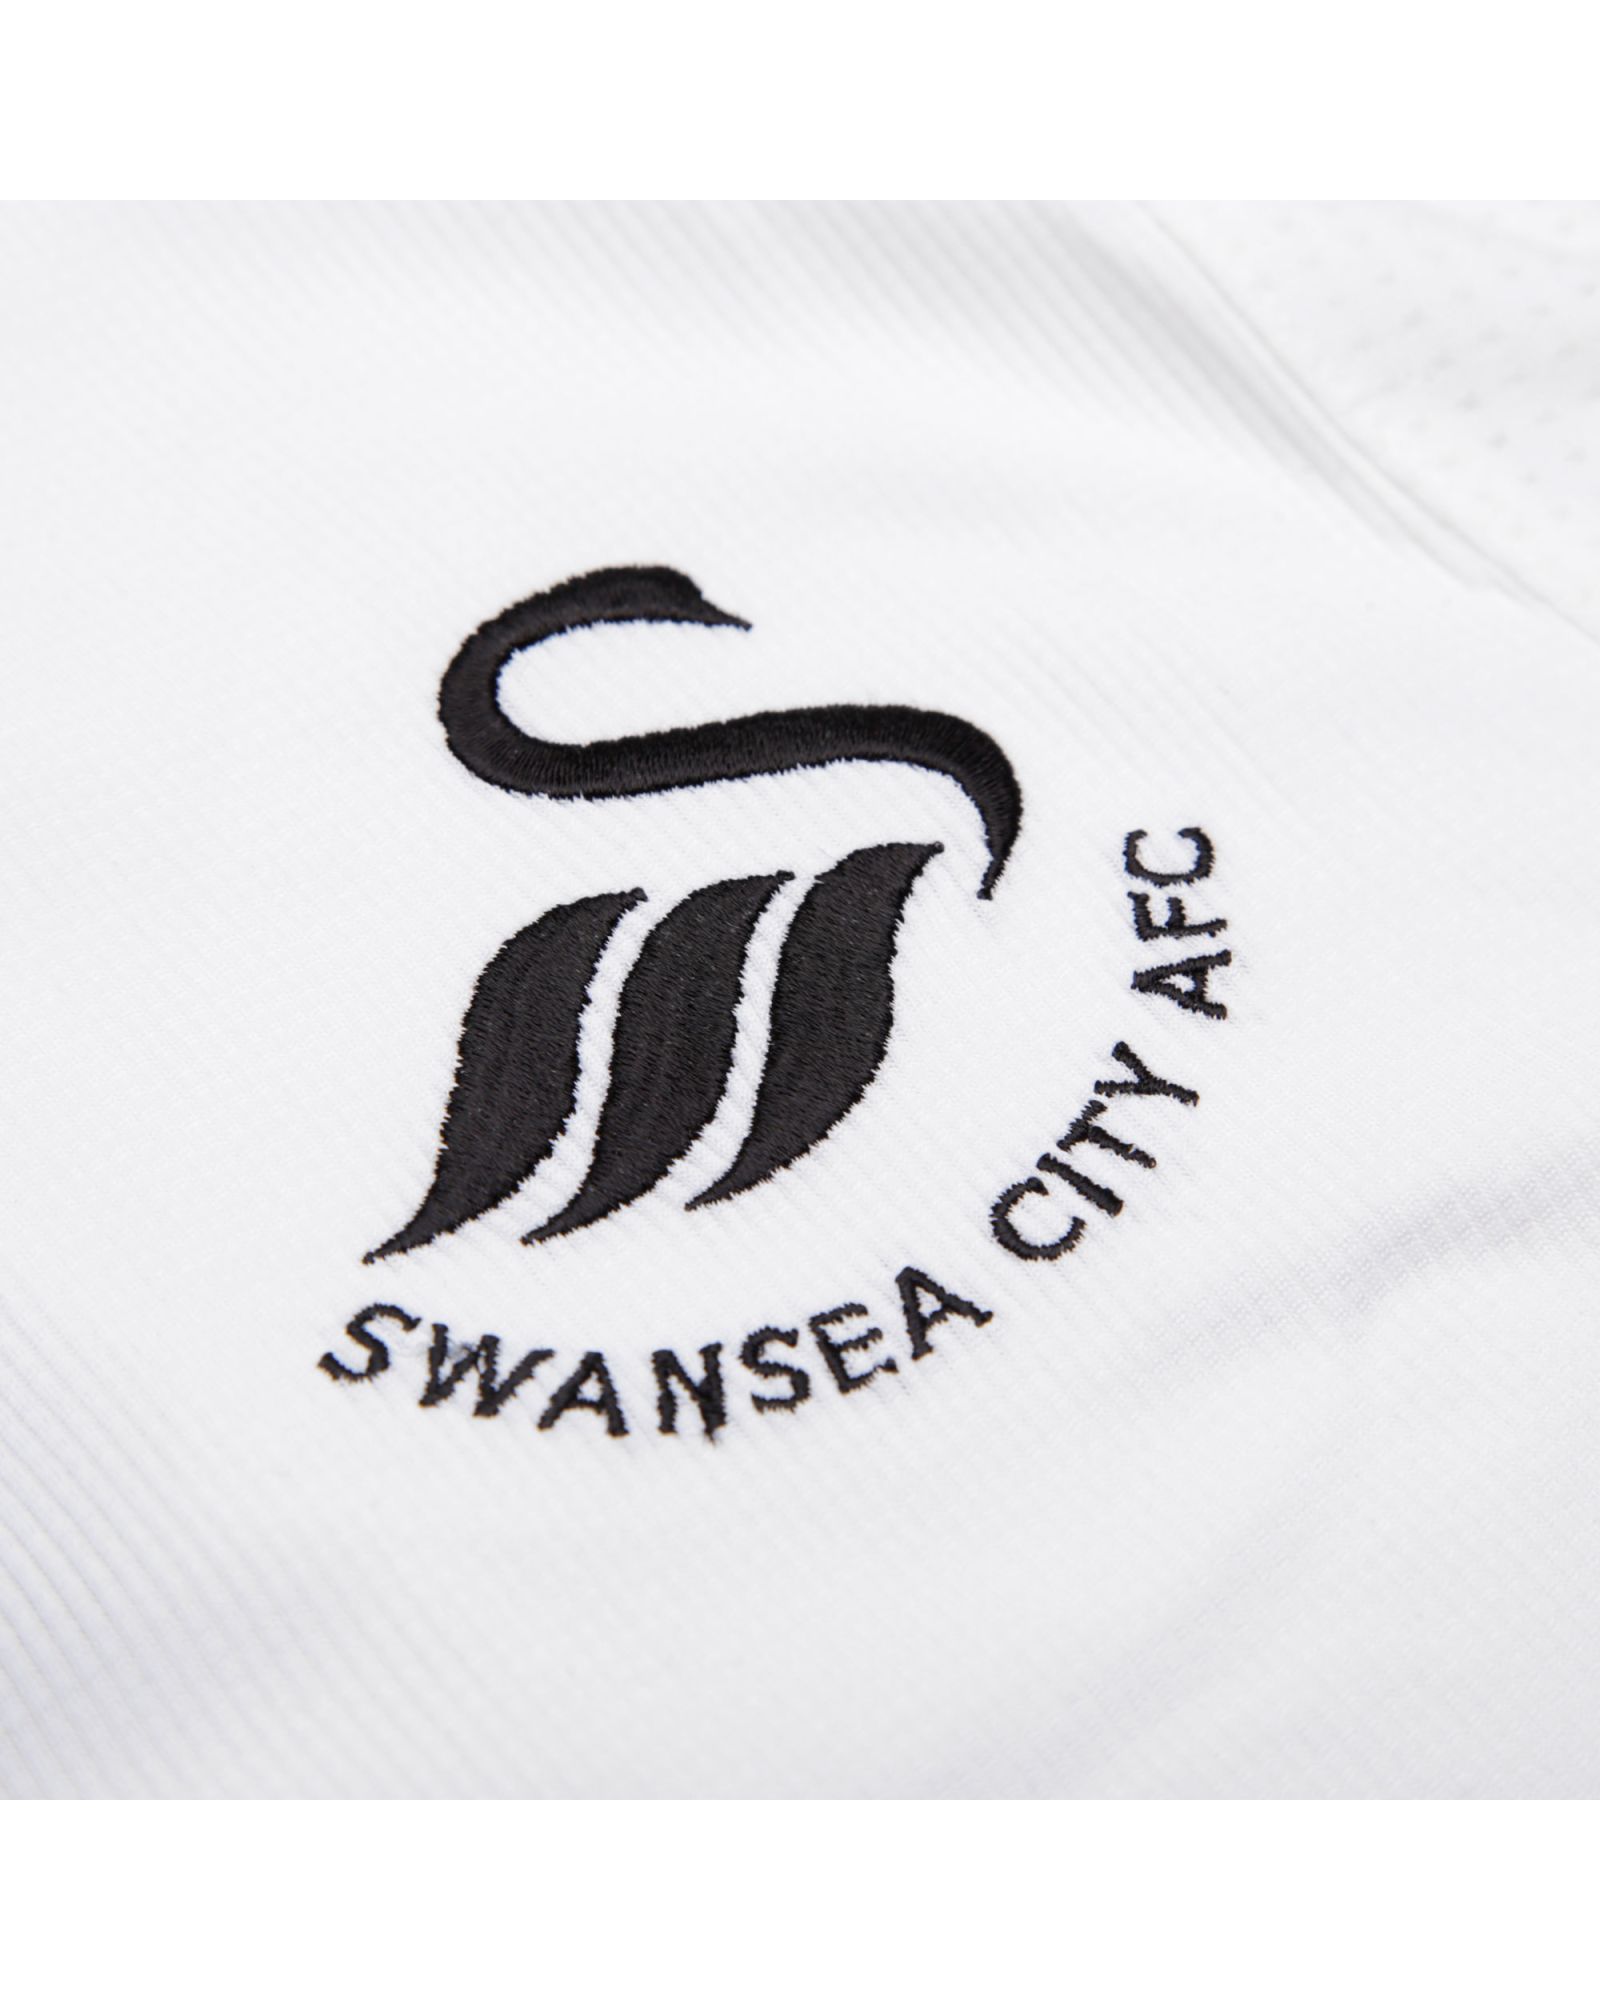 Camiseta 1ª Swansea 2018/2019 Blanco - Fútbol Factory